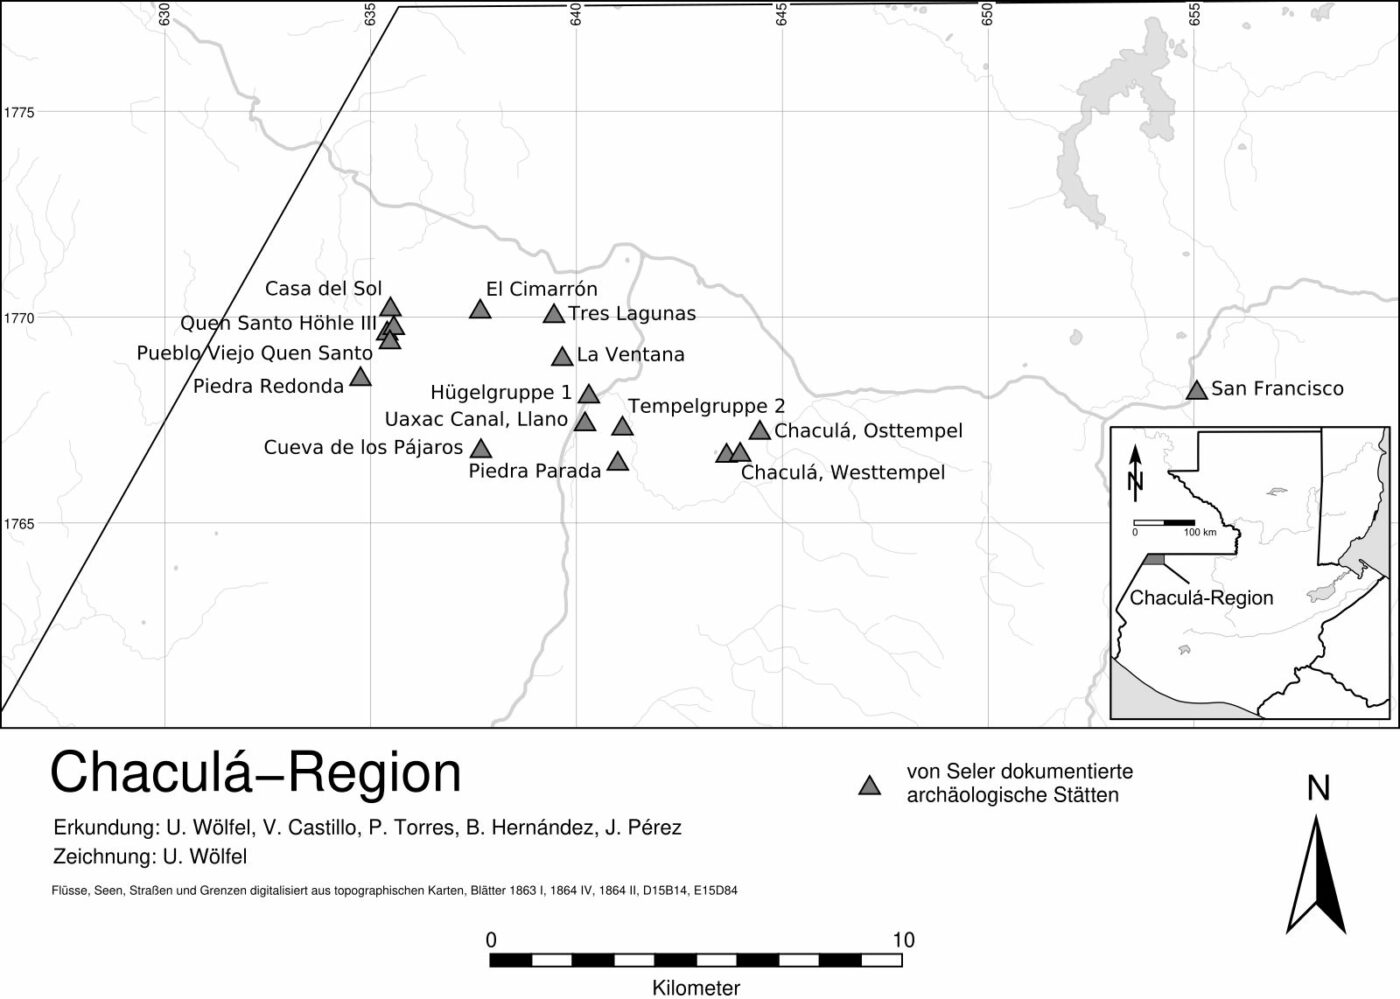 Karte der Chaculá-Region, Zeichnung U. Wölfel